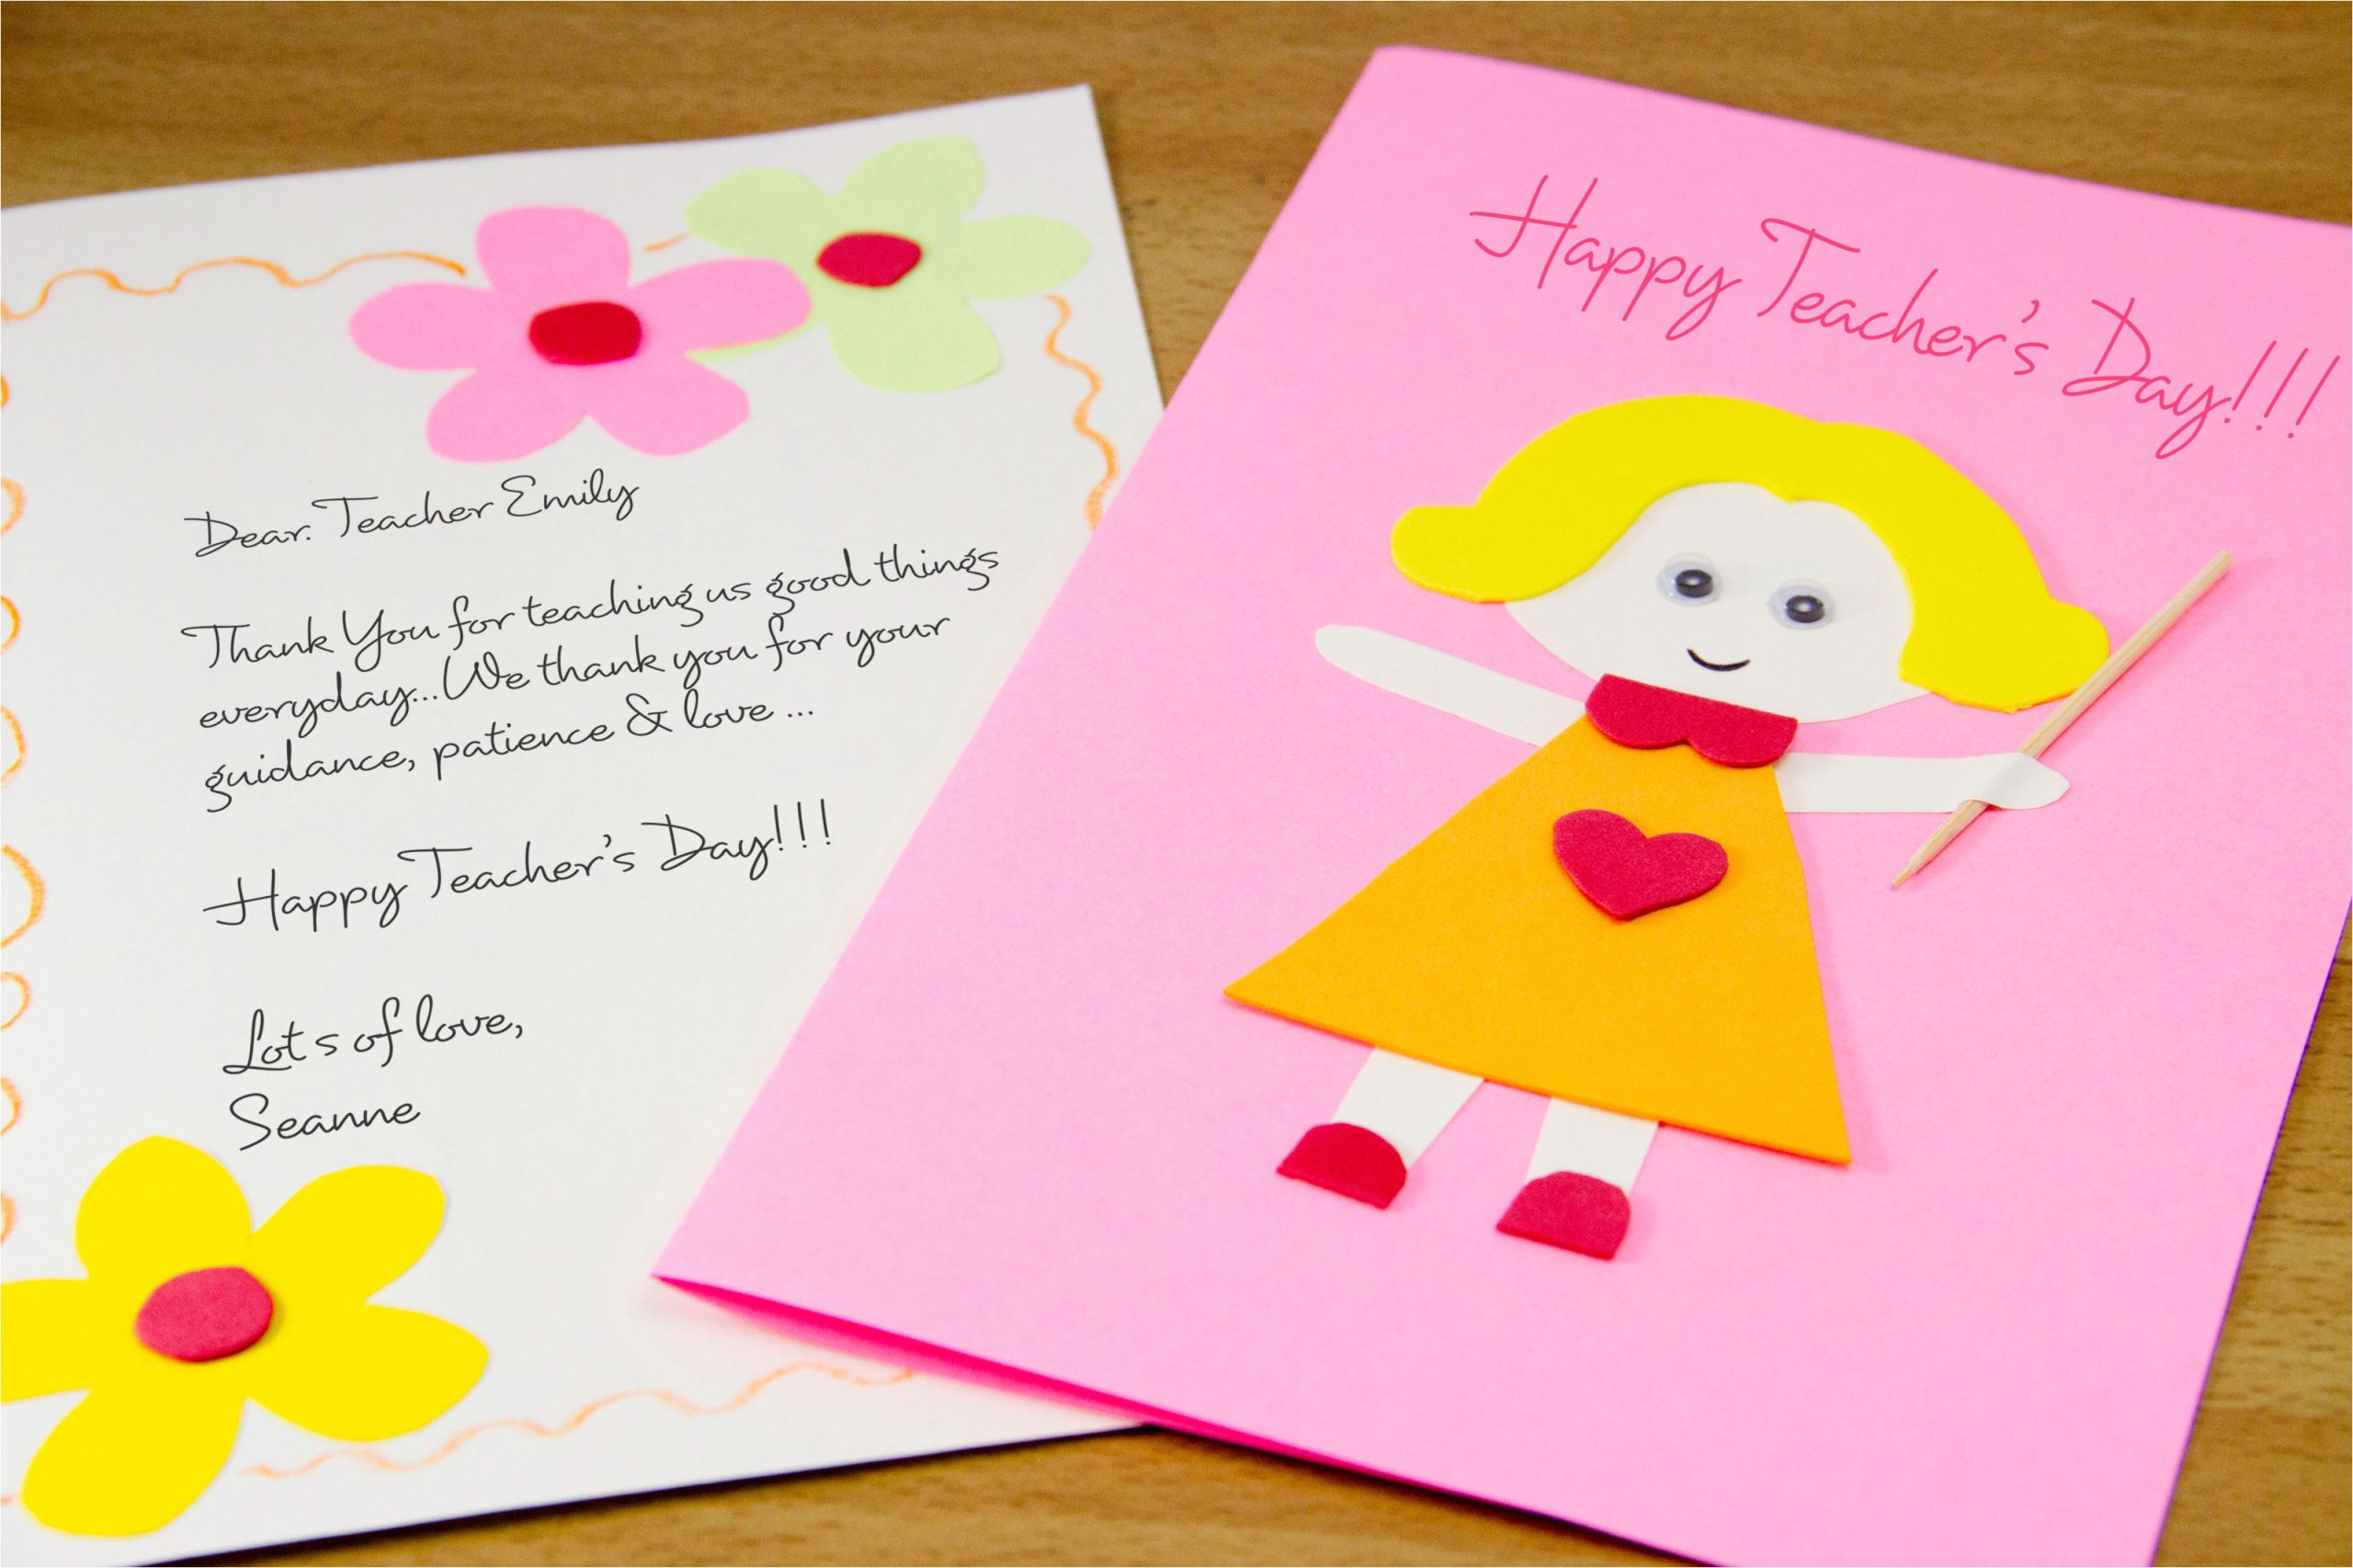 Teachers Day Card Ke Liye How to Make A Homemade Teacher S Day Card 7 Steps with